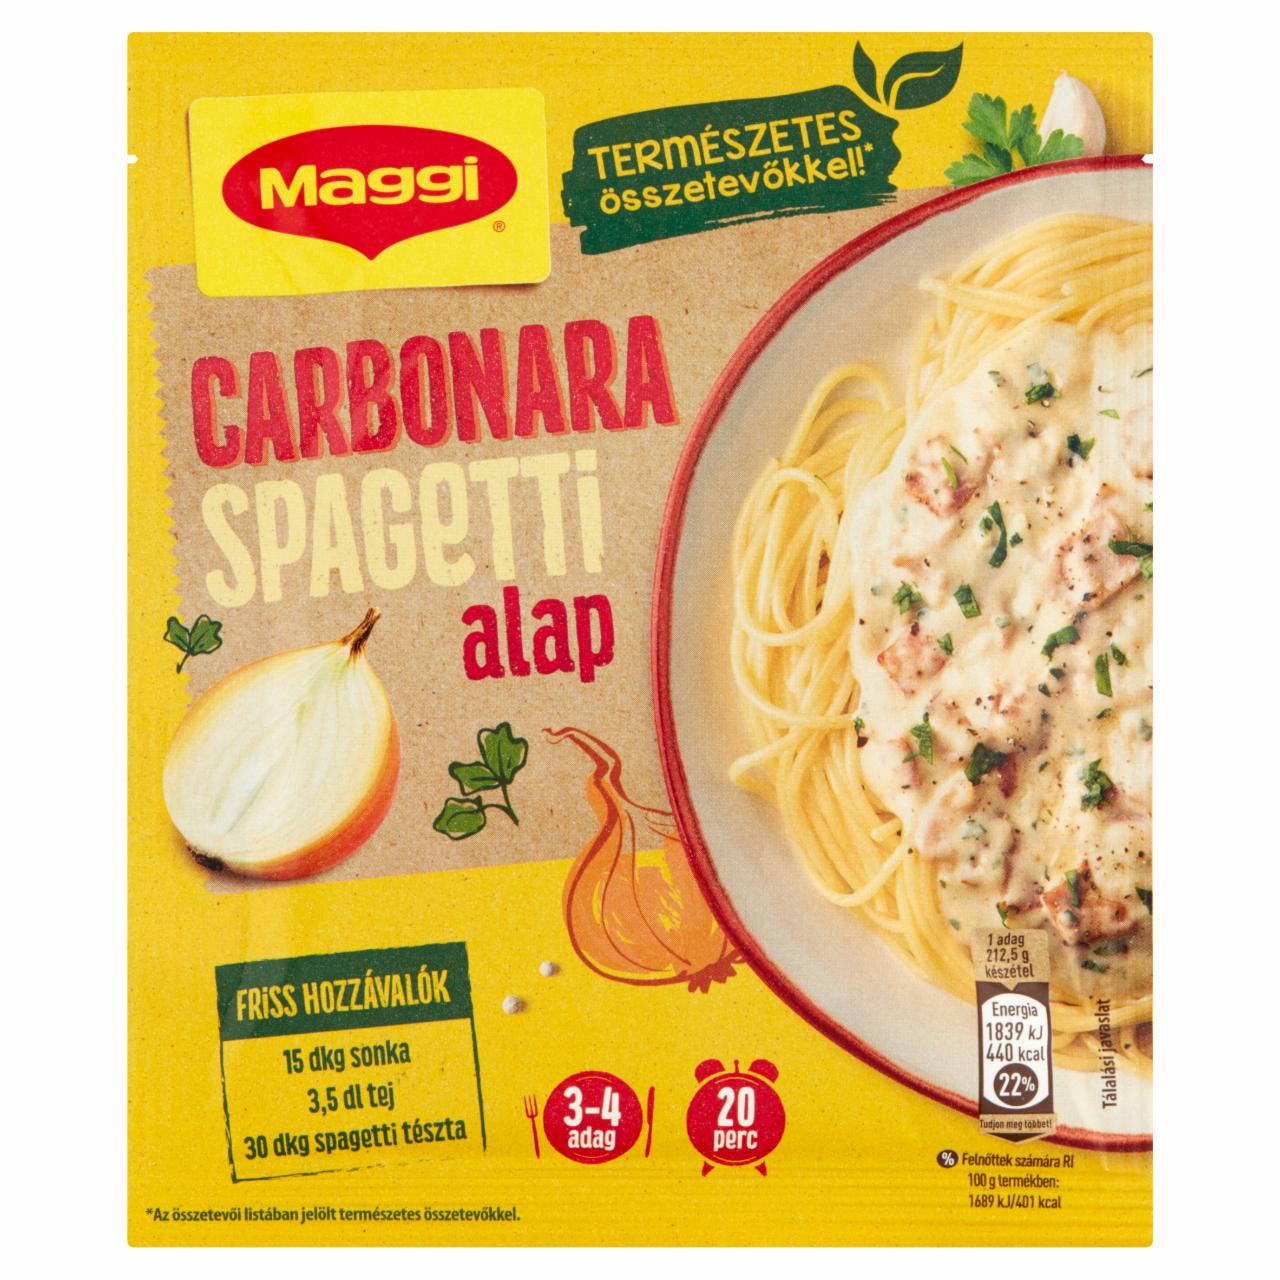 Képek - Maggi Carbonara spagetti alap 30 g